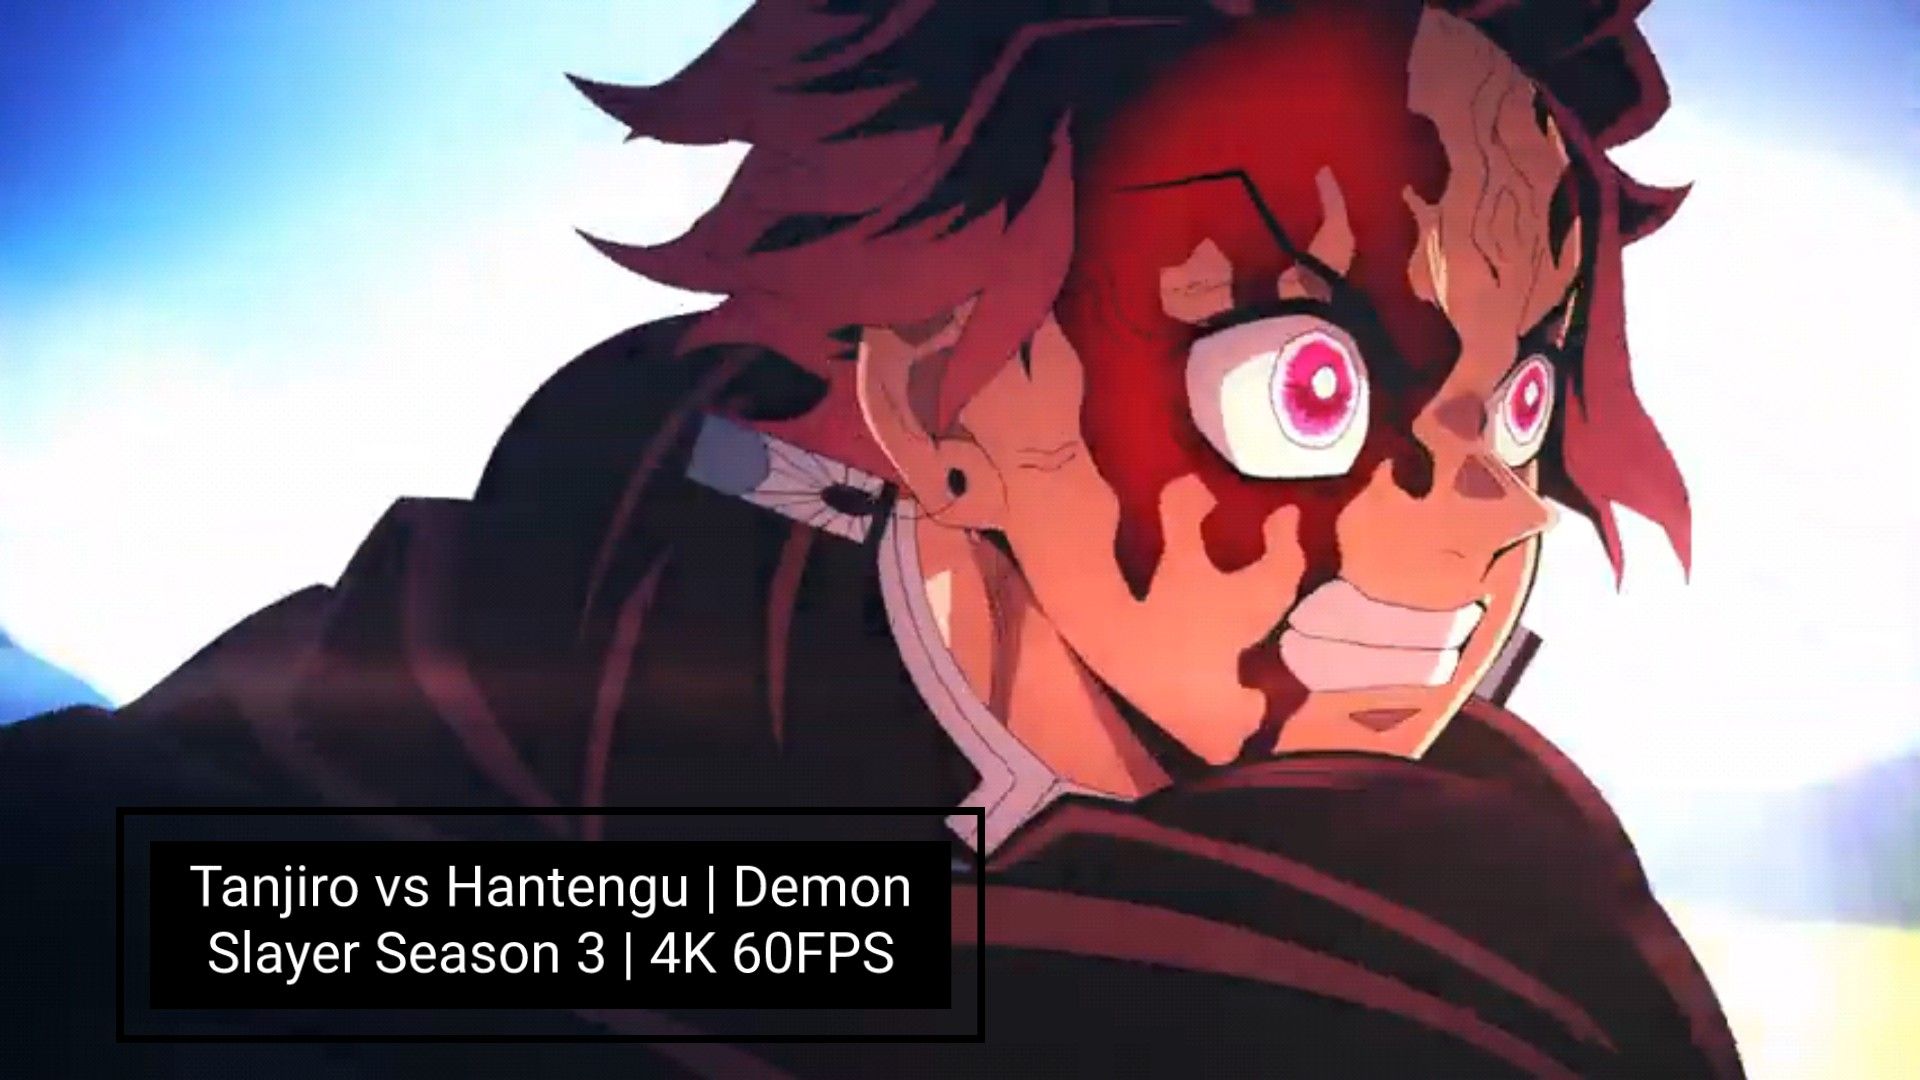 THIS IS 4K60fps ANIME  Demon Slayer Season 3 Episode 4 